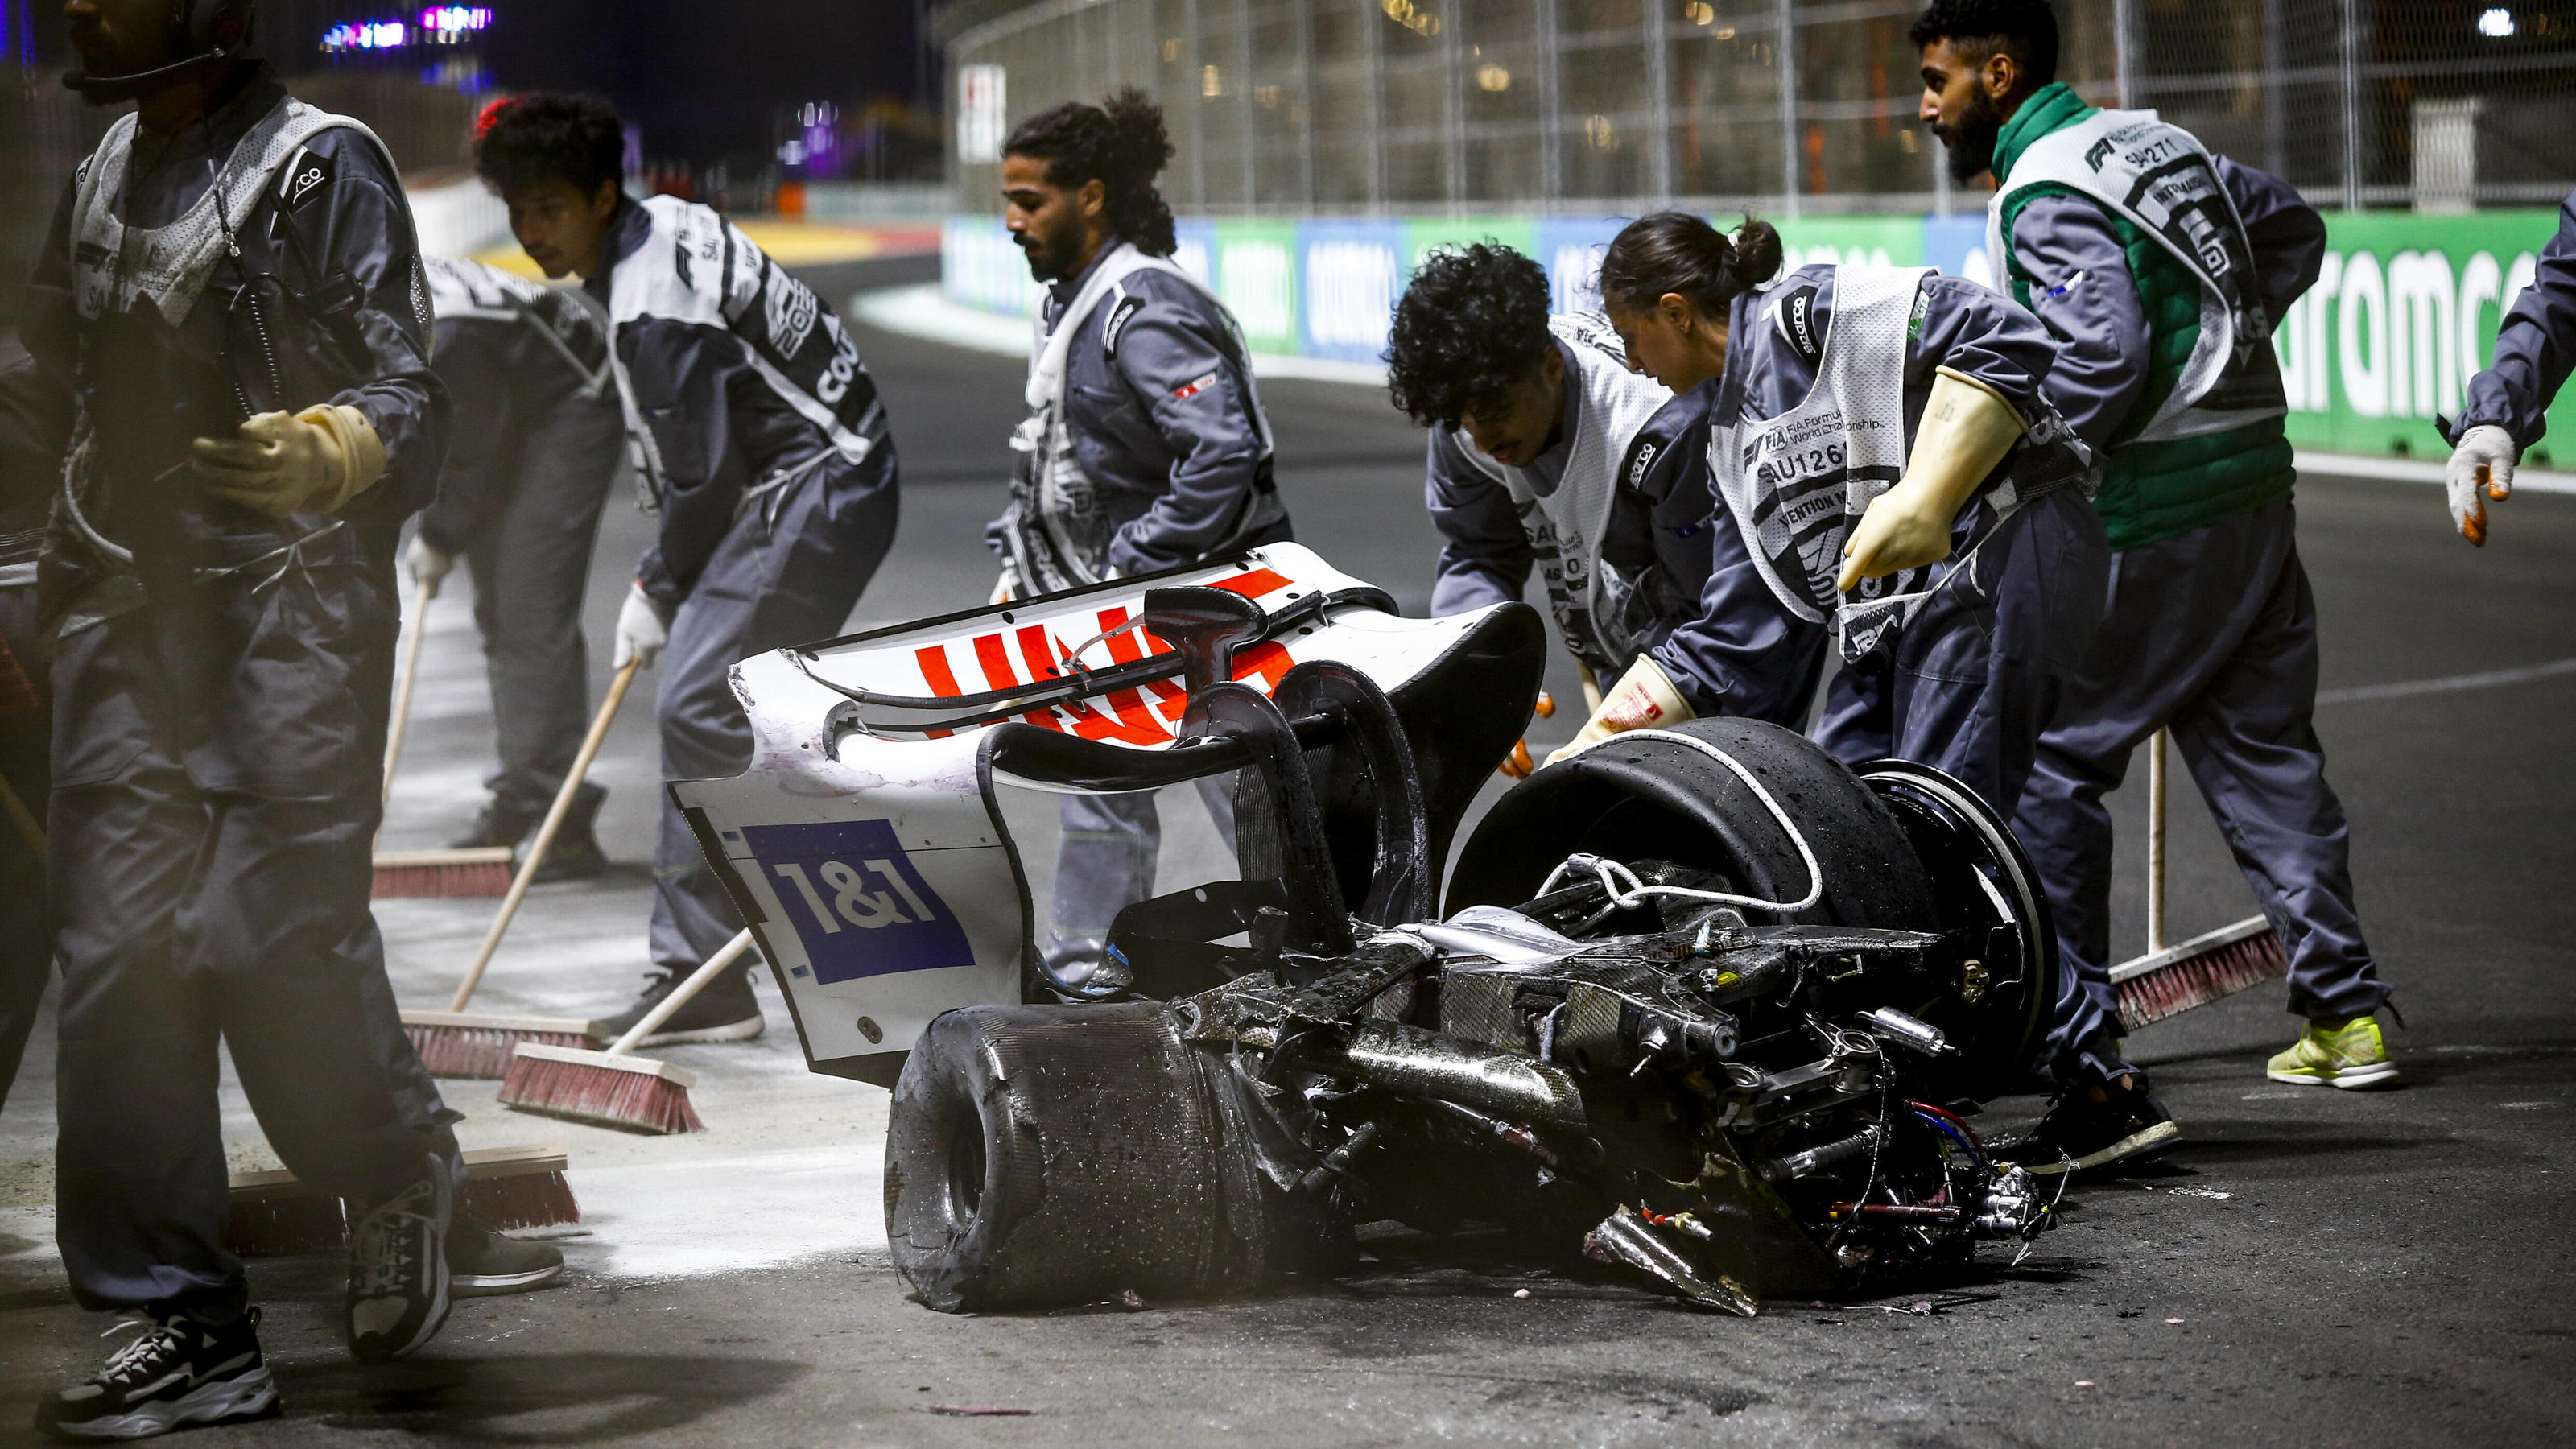  Debris pictured following the crash of 47 Mick Schumacher DEU, Haas F1 Team, F1 Grand Prix of Saudi Arabia at Jeddah Corniche Circuit on March 26, 2022 in Jeddah, Saudi Arabia. Photo by HOCH ZWEI Jeddah Saudi Arabia *** Debris pictured following the